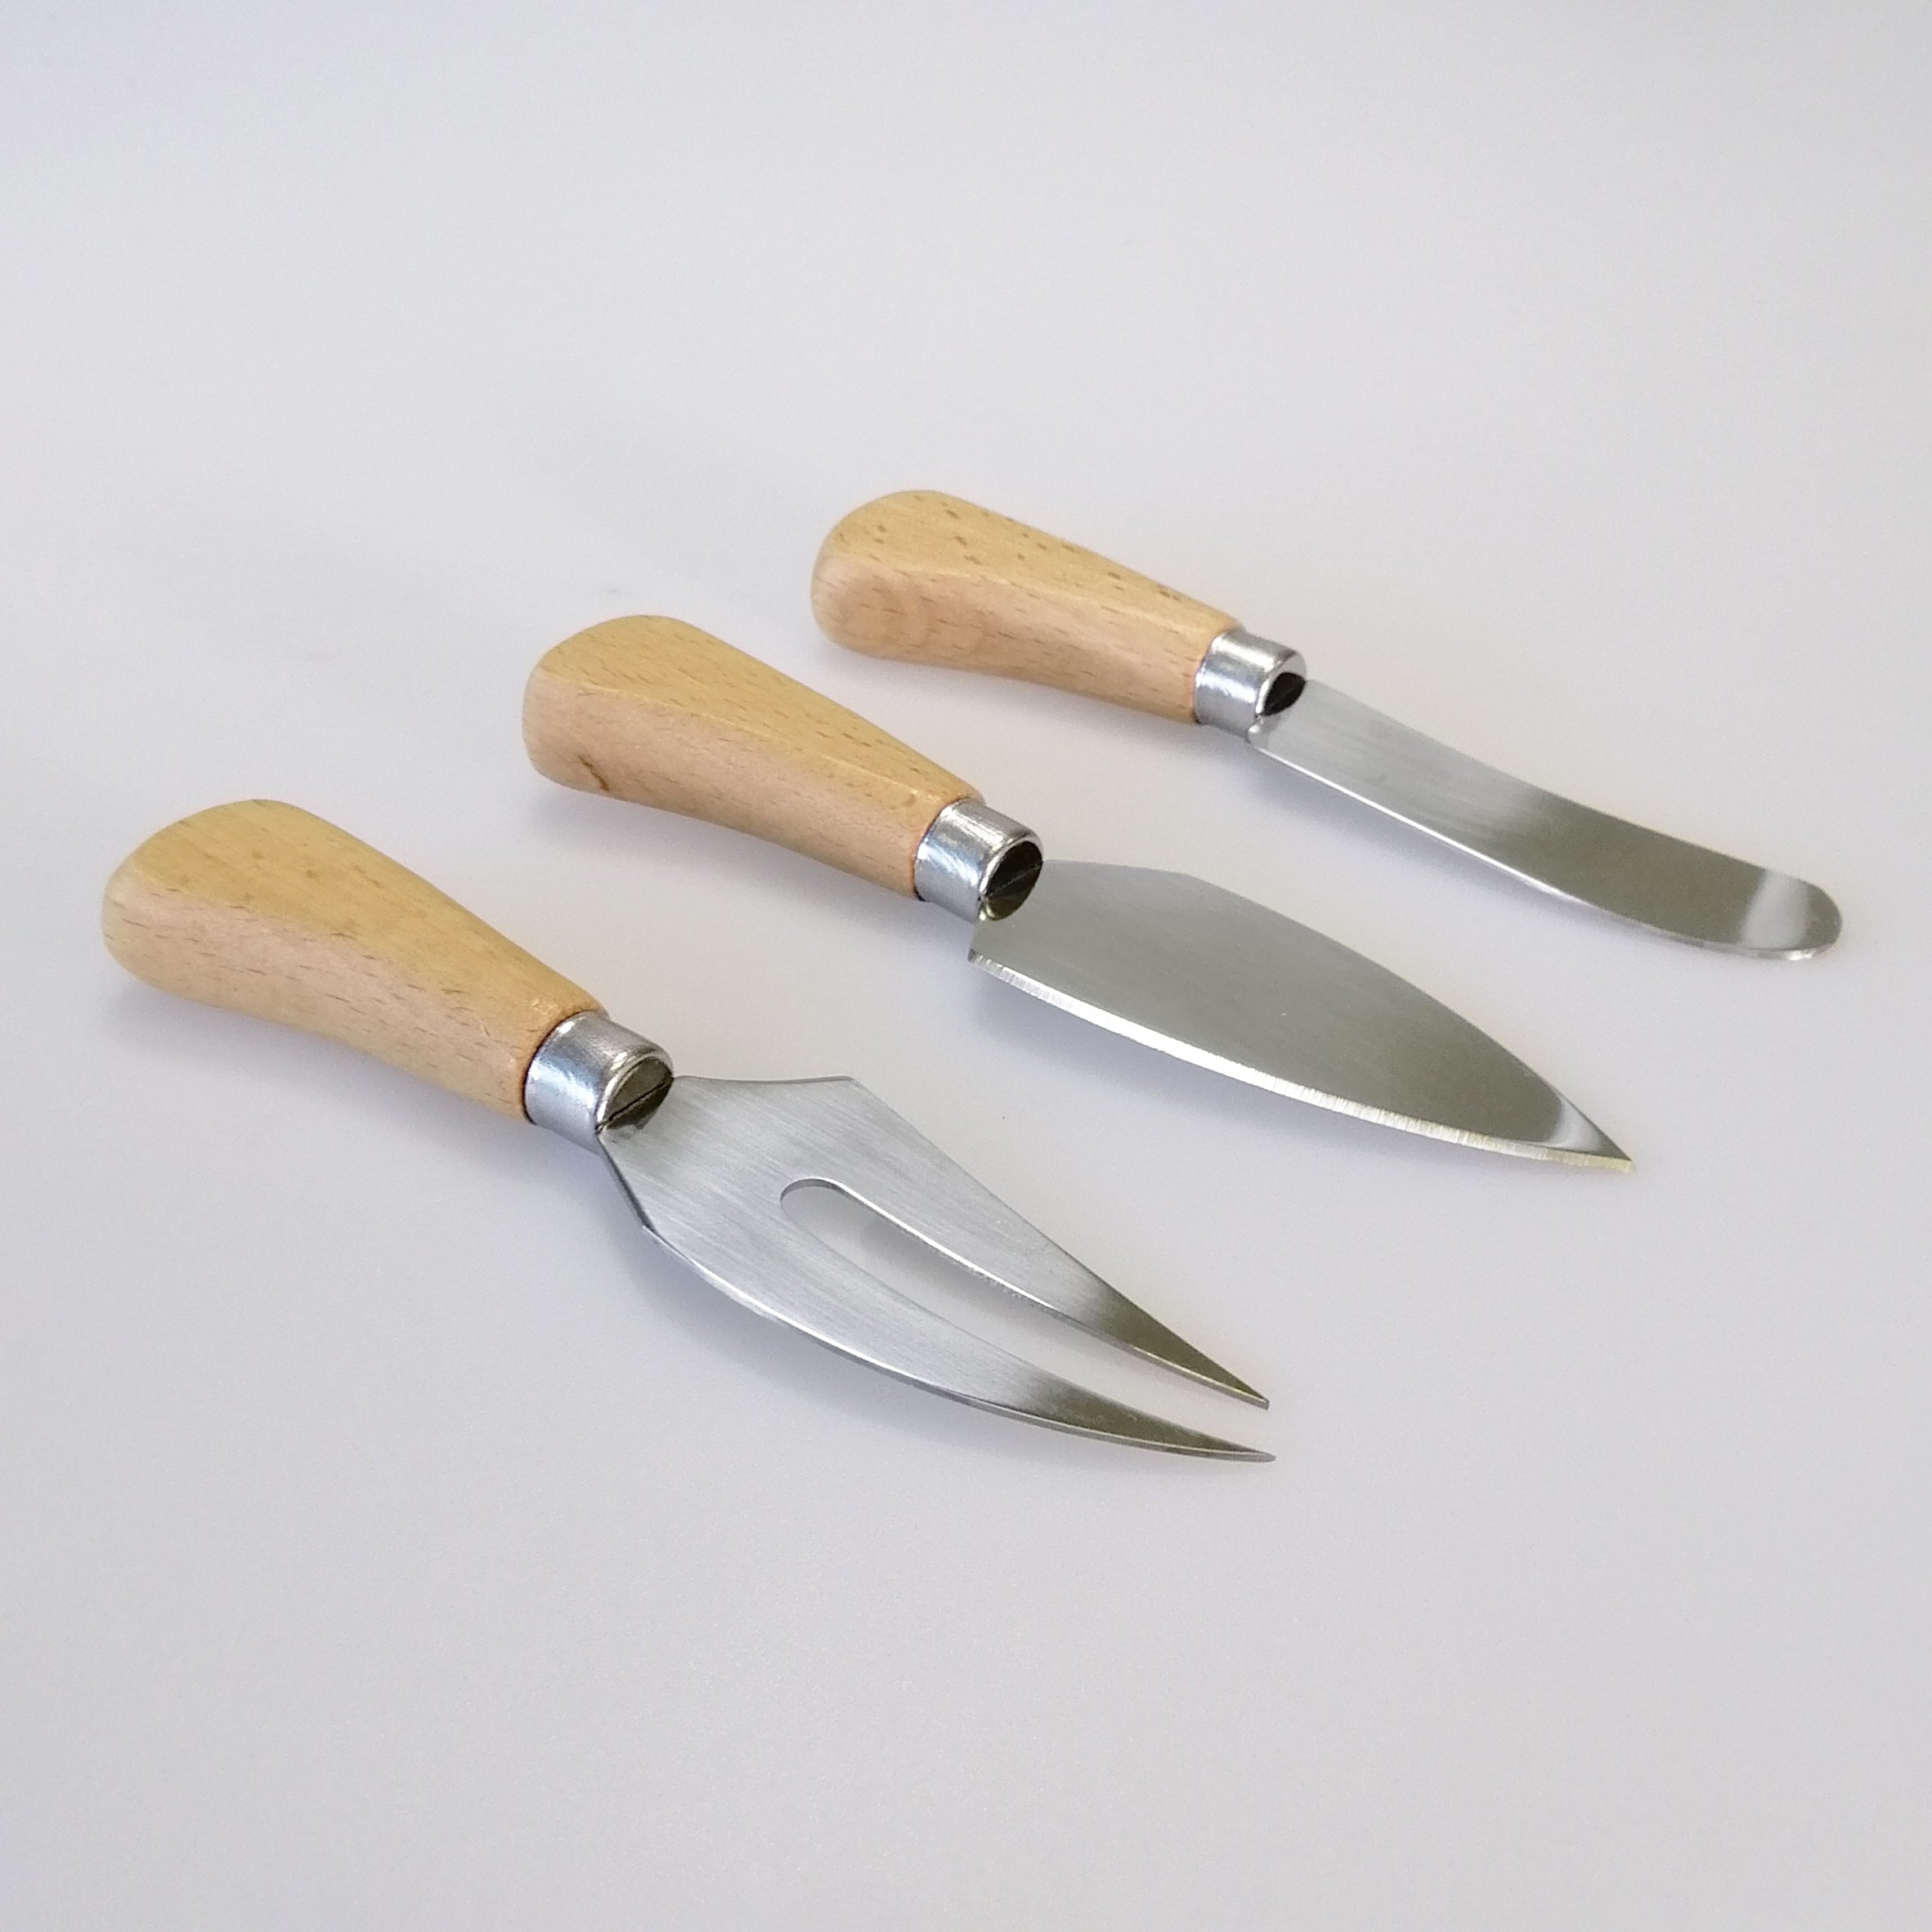 Tempa - Cheese Knife 3pc Set